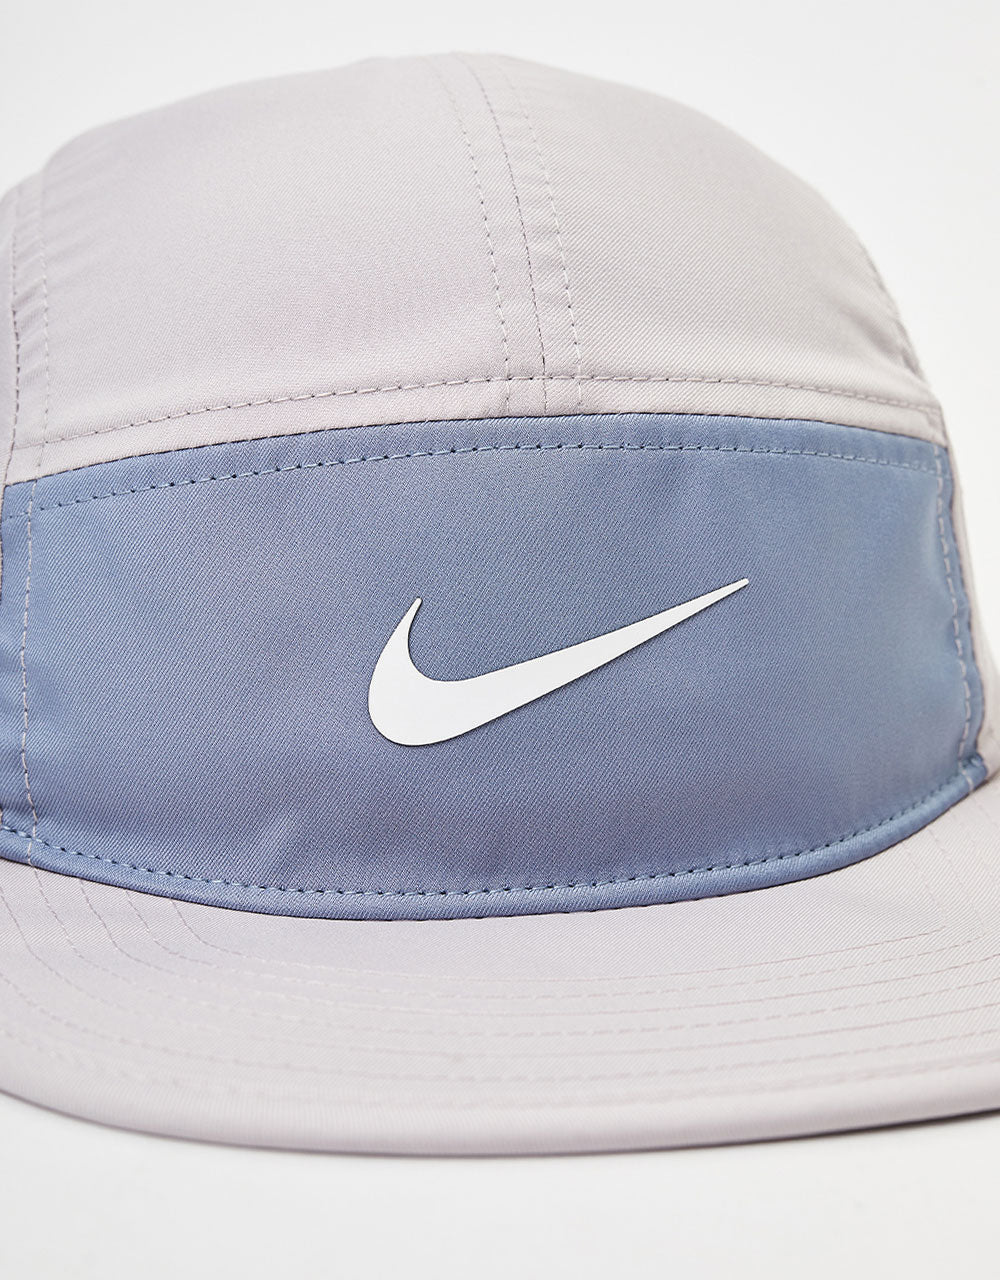 Nike Dri-FIT Fly Cap - Platinum Violet/Anthracite/White